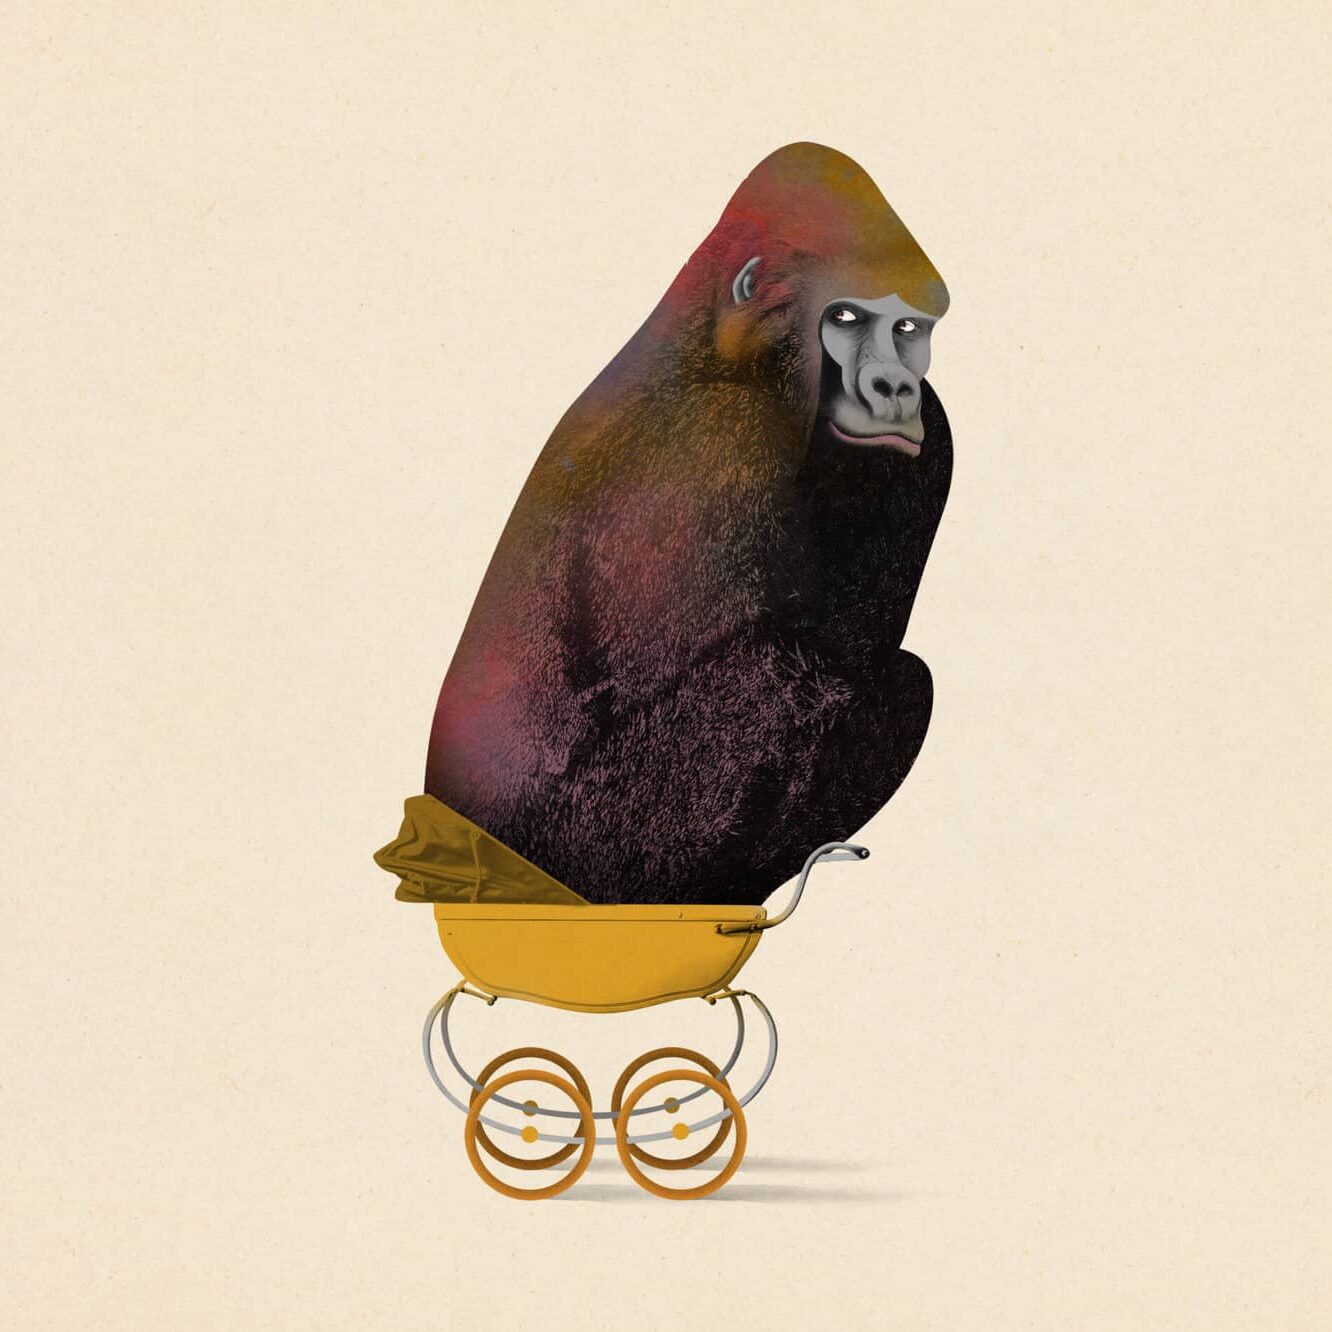 image of a gorilla in a pram for Oglivy illustrated by Brett Ryder